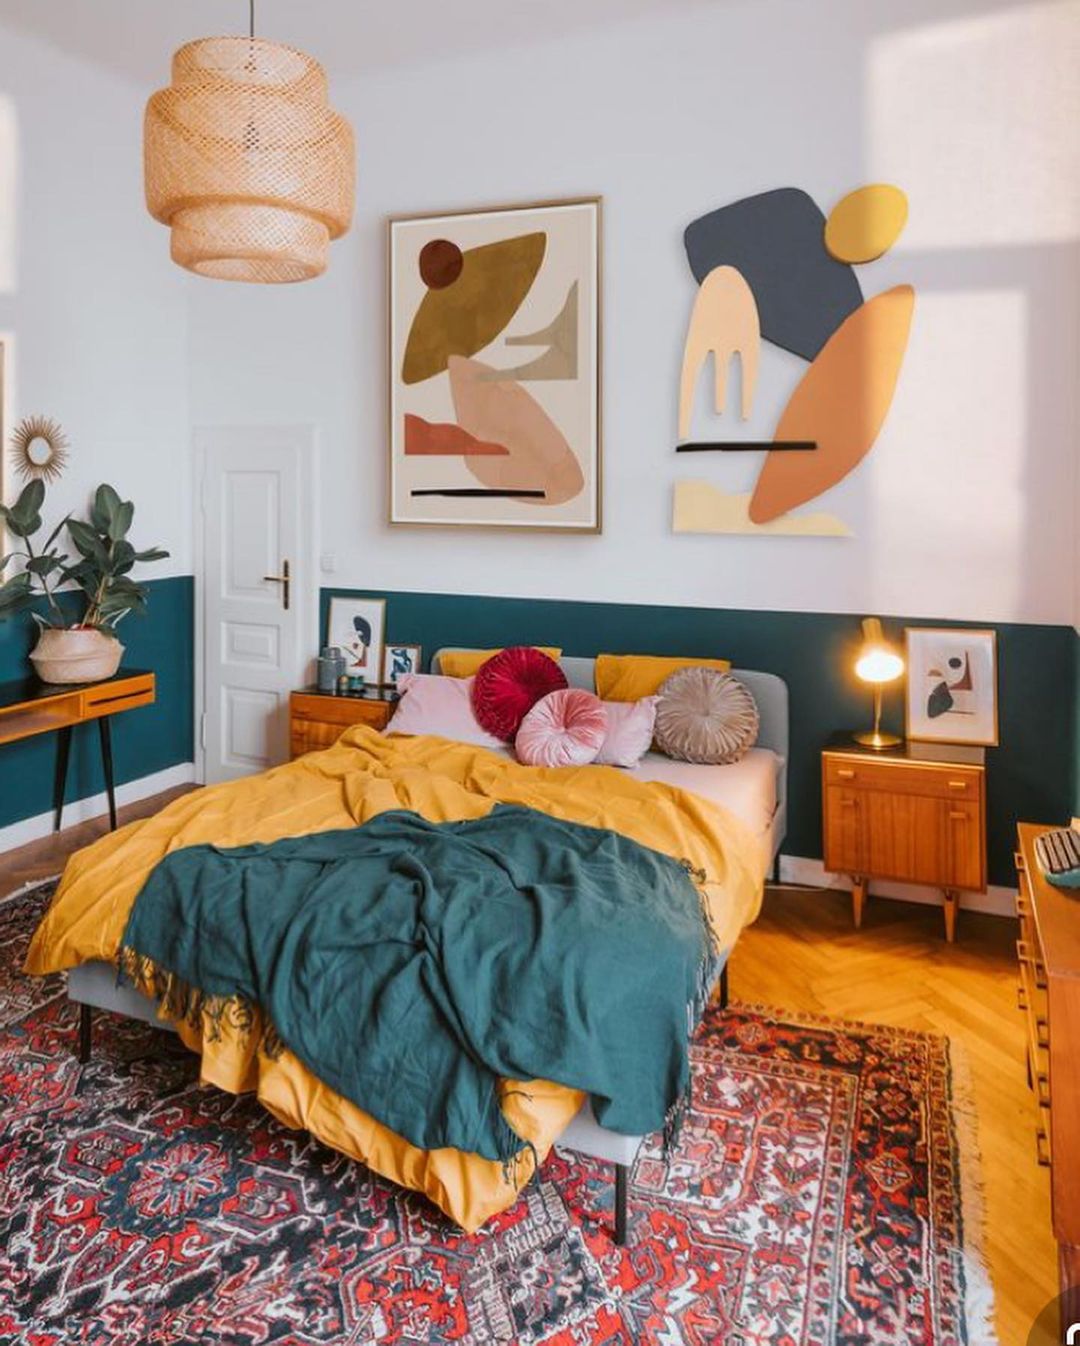 Boho-Chic: Creating a Serene and Stylish Bohemian Bedroom